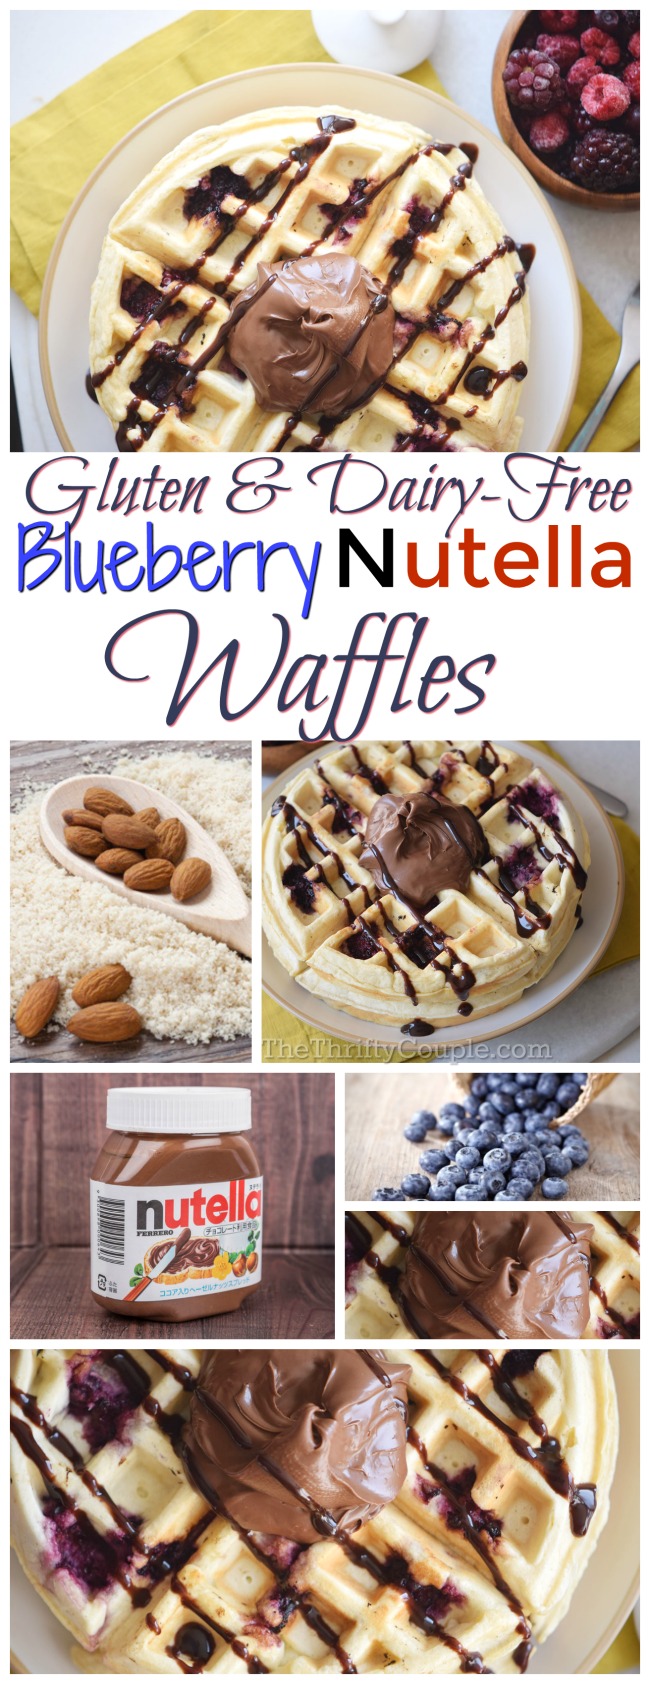 gluten-dairy-free-blueberry-nutella-waffles-recipe